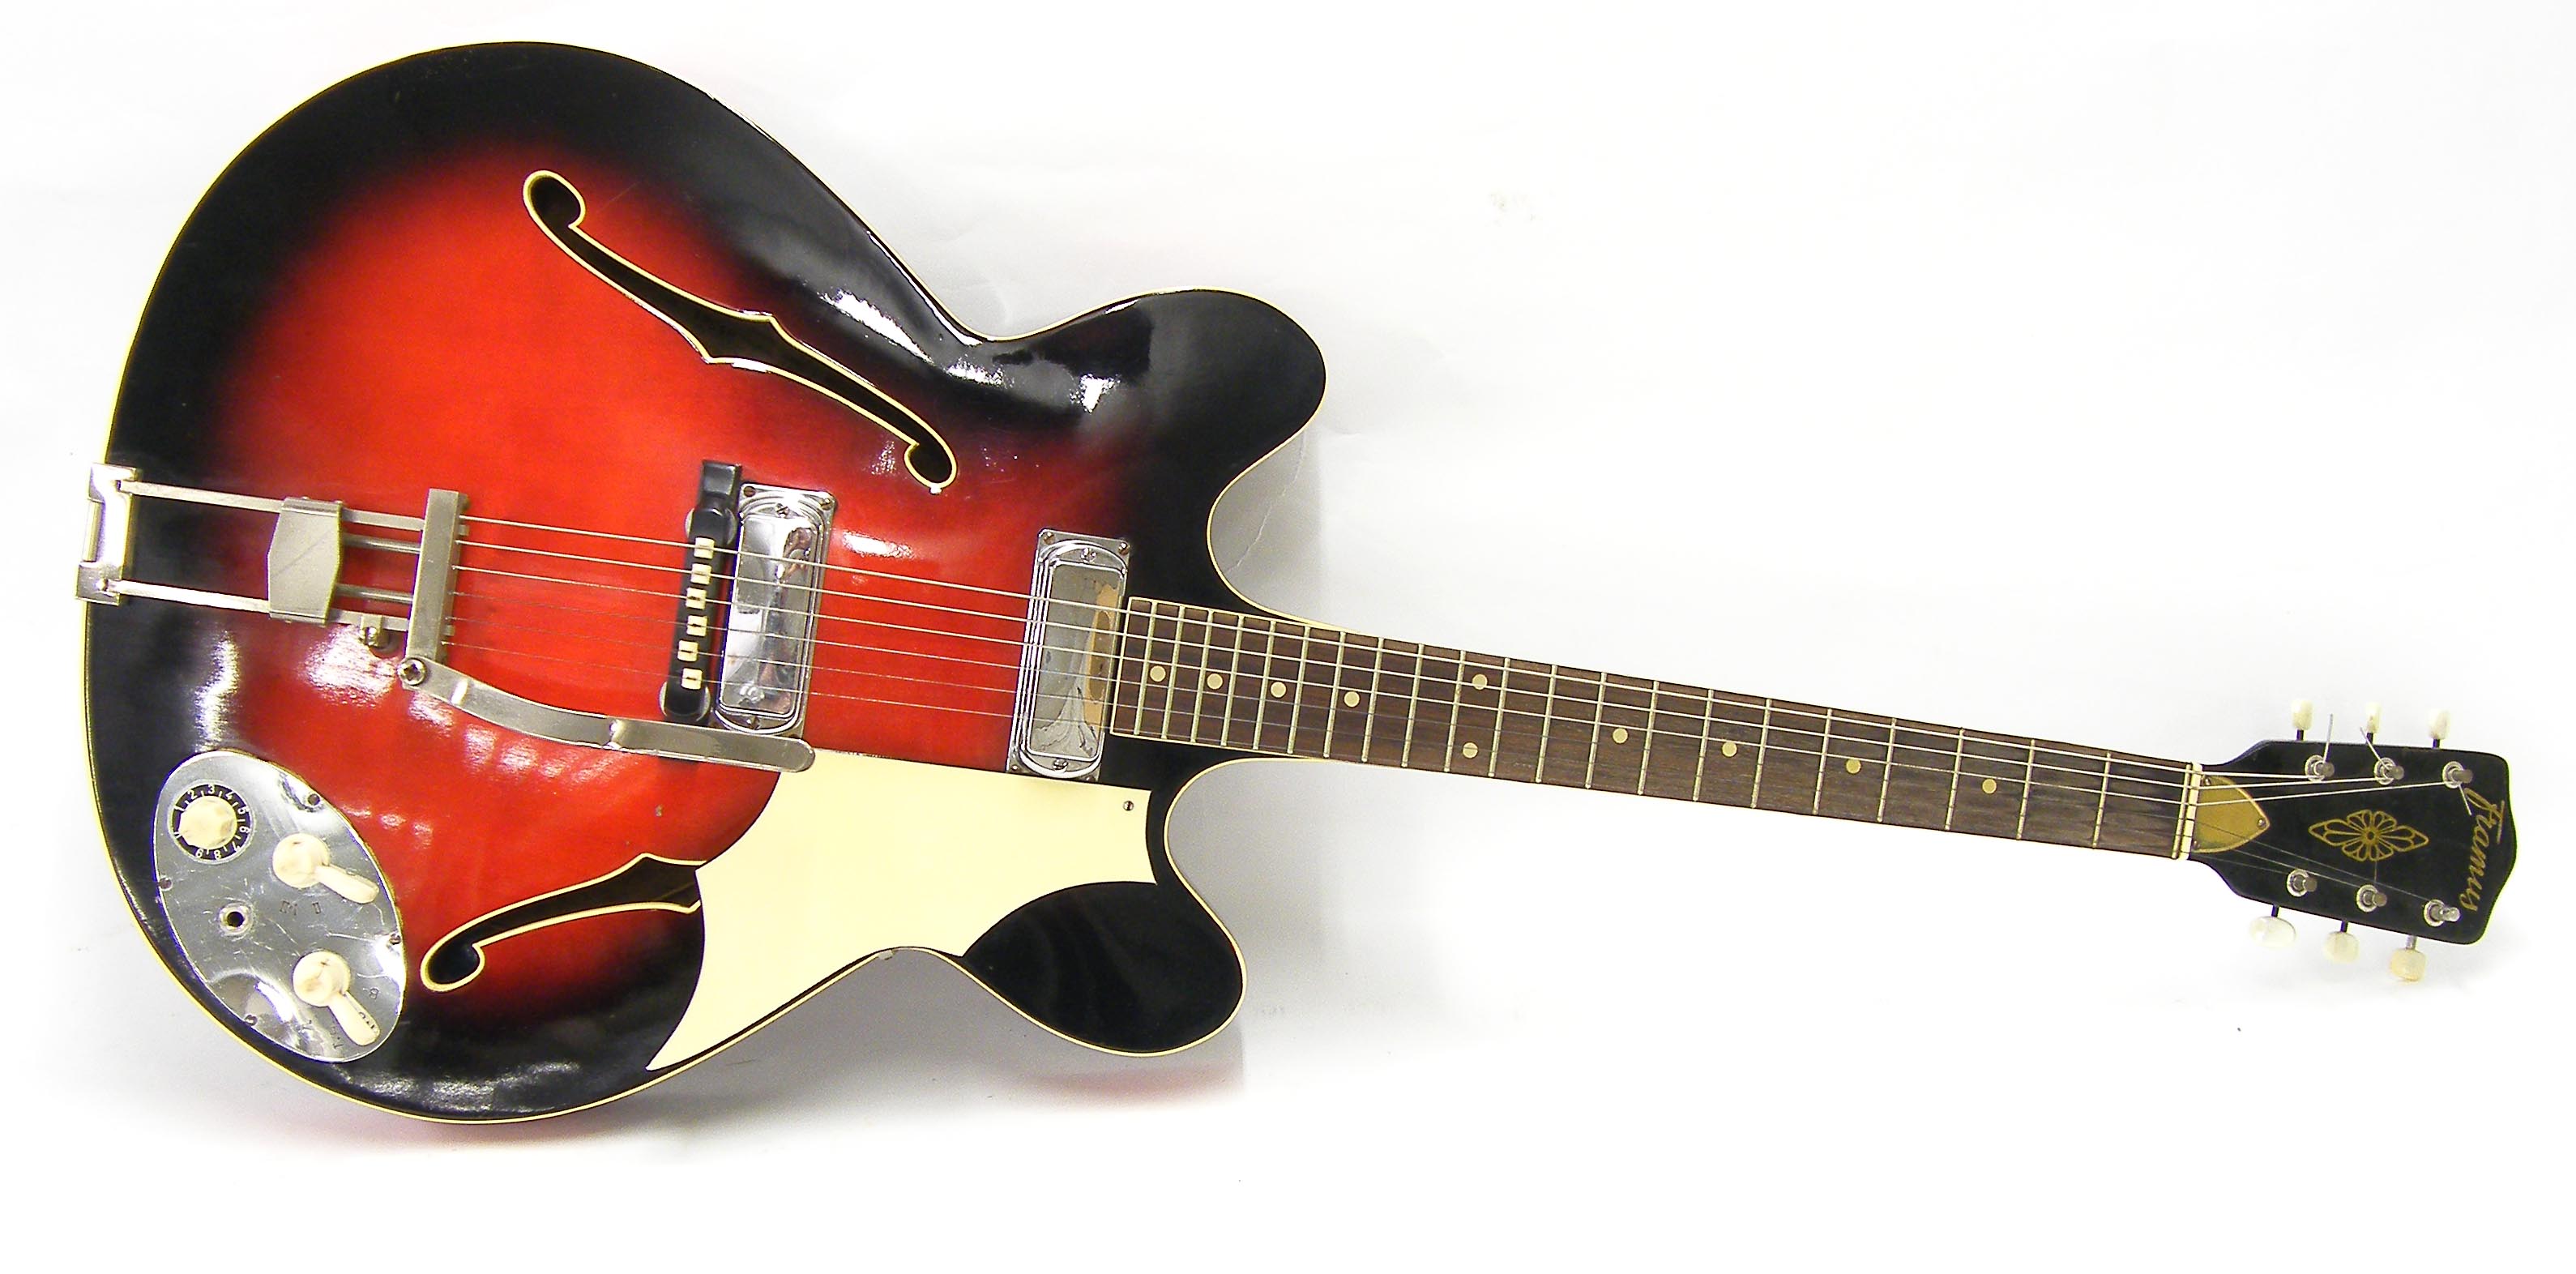 Framus 5/114-52 Fret Jet electric guitar, made in West Germany, circa 1963, ser. no. 09504, 21